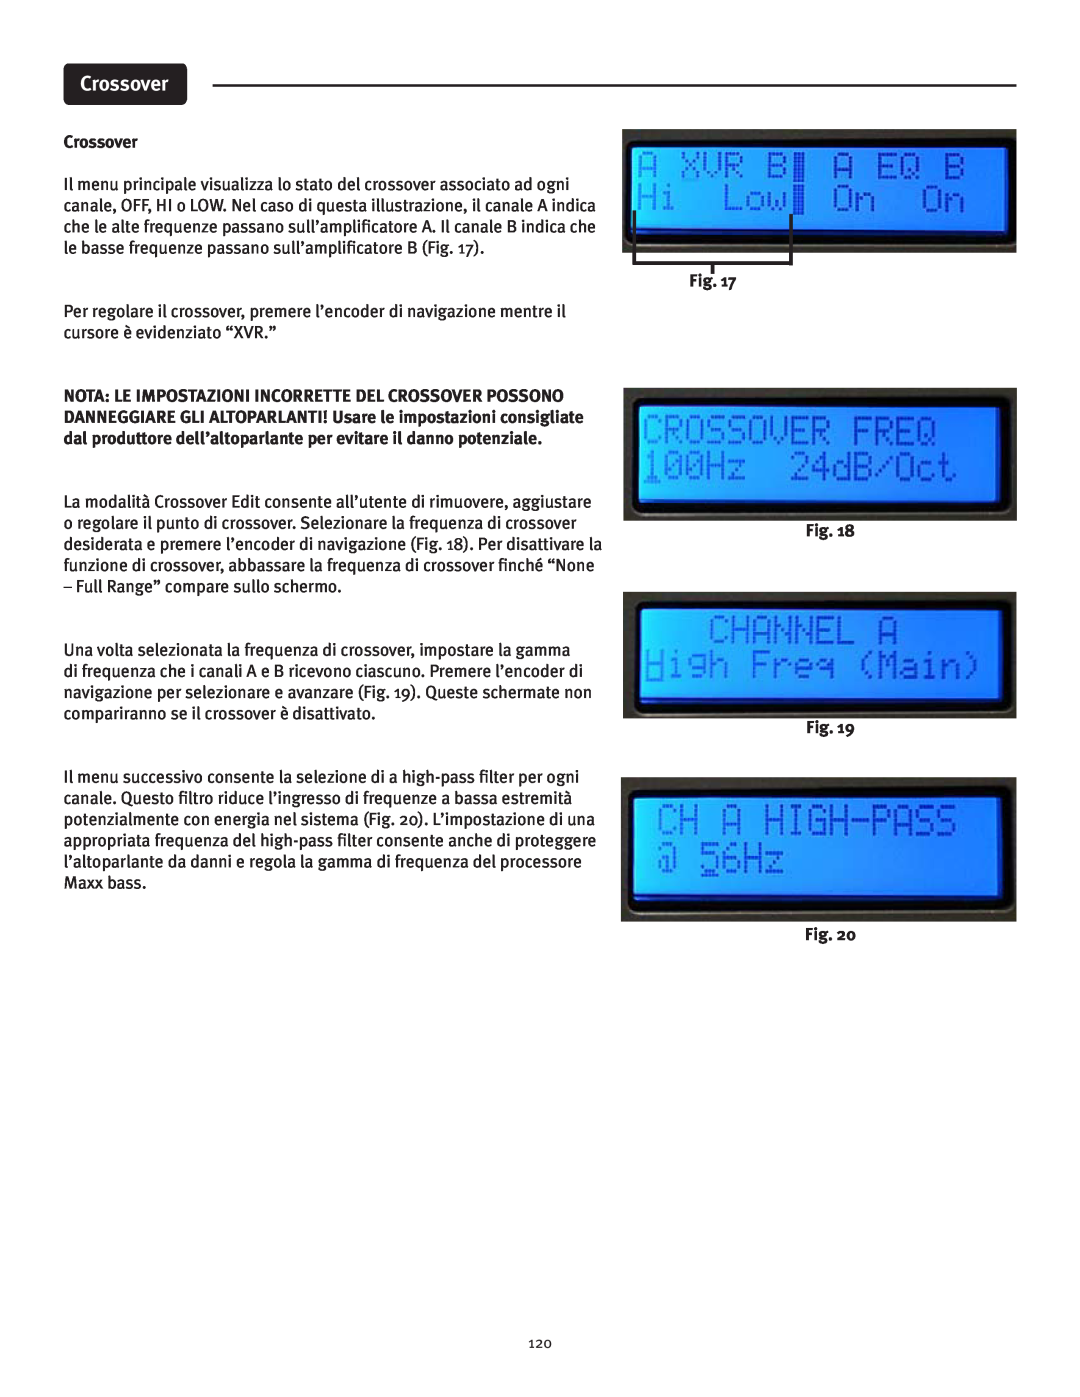 Peavey IPR 3000, IPR 6000, IPR 4500, IPR 1600 manual Crossover, Full Range” compare sullo schermo 